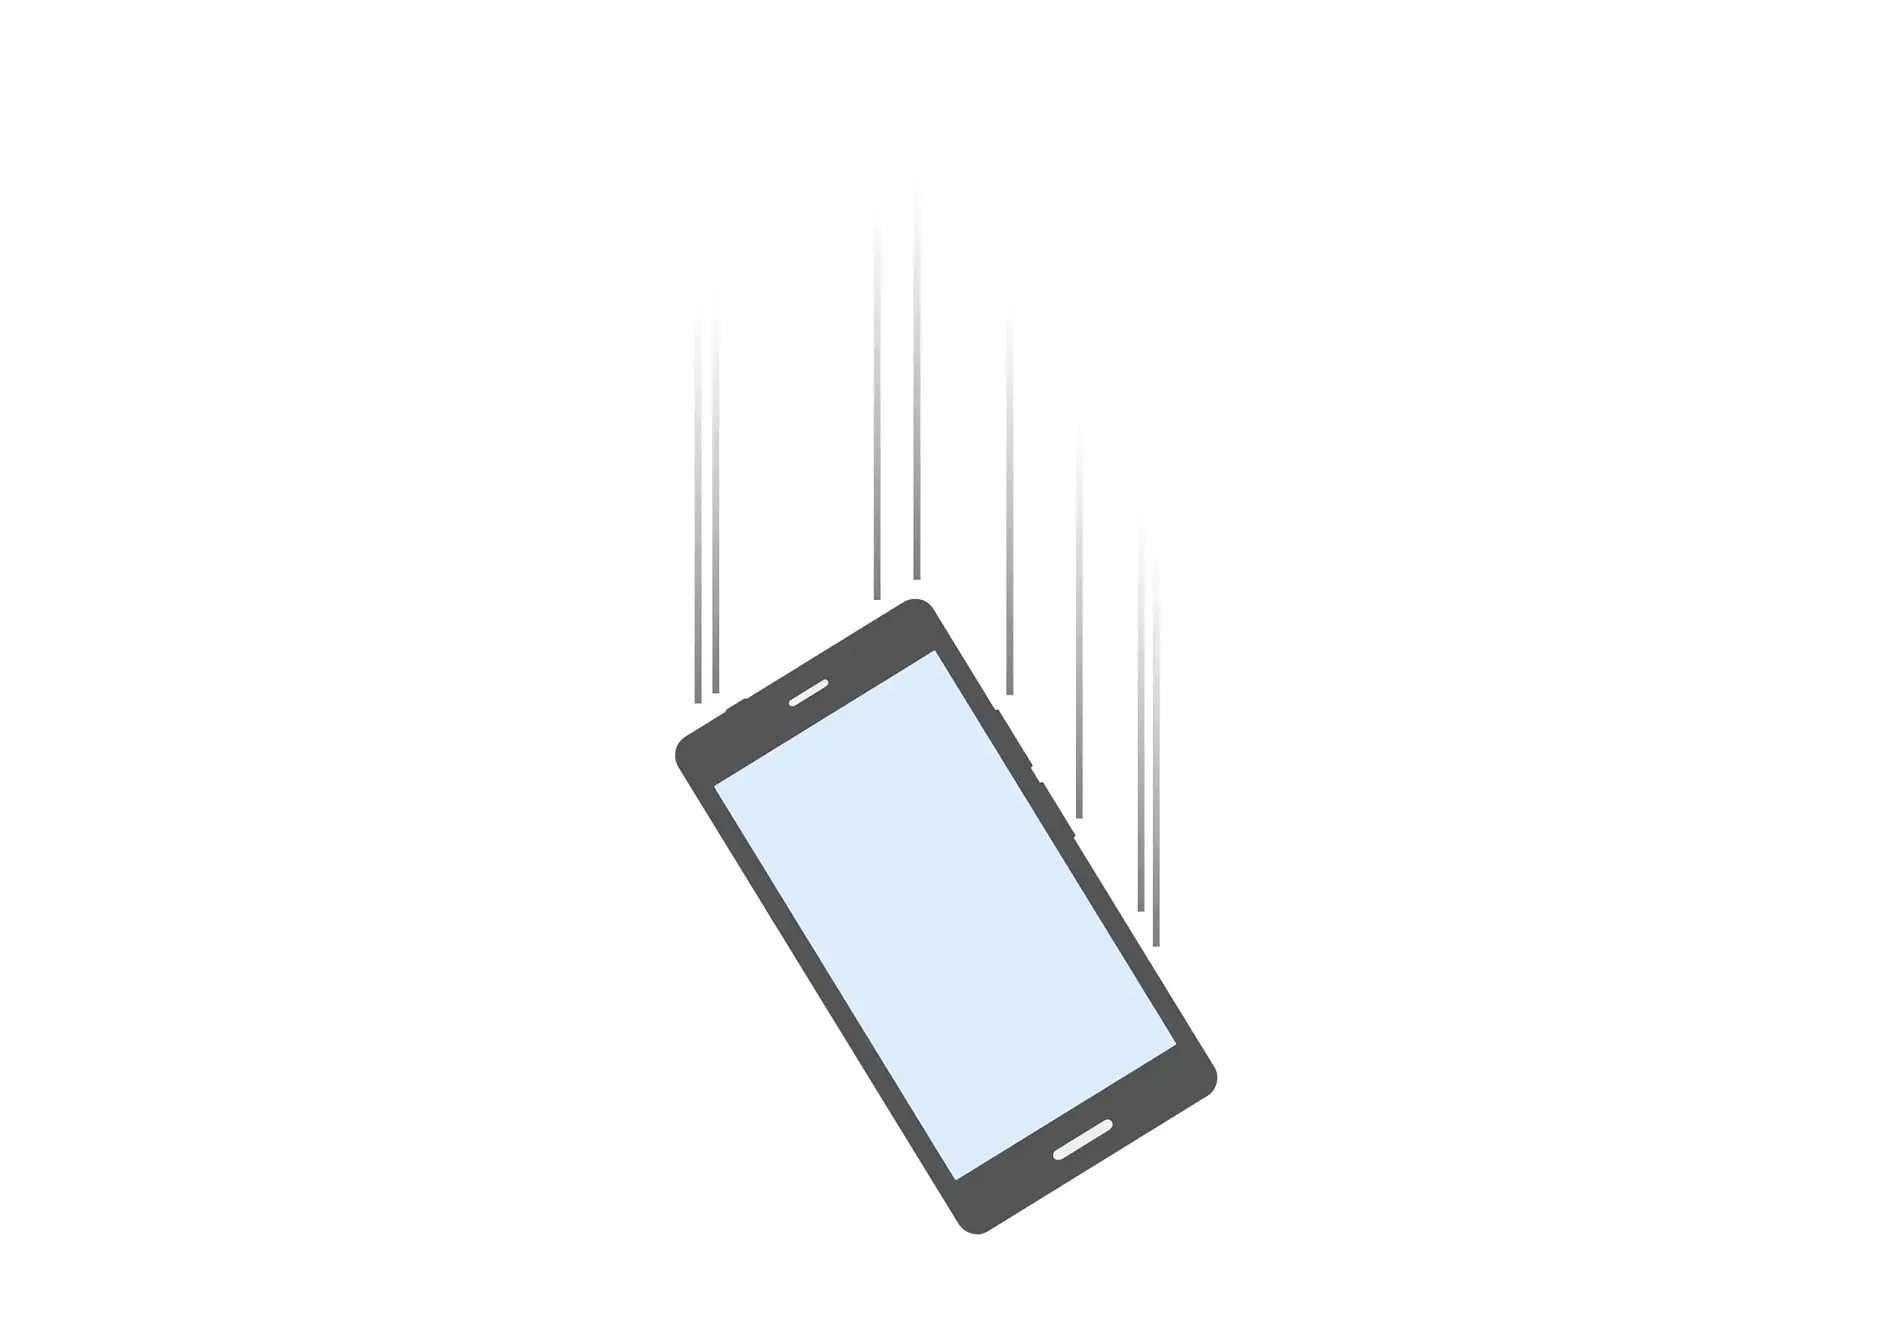 Falling smartphone